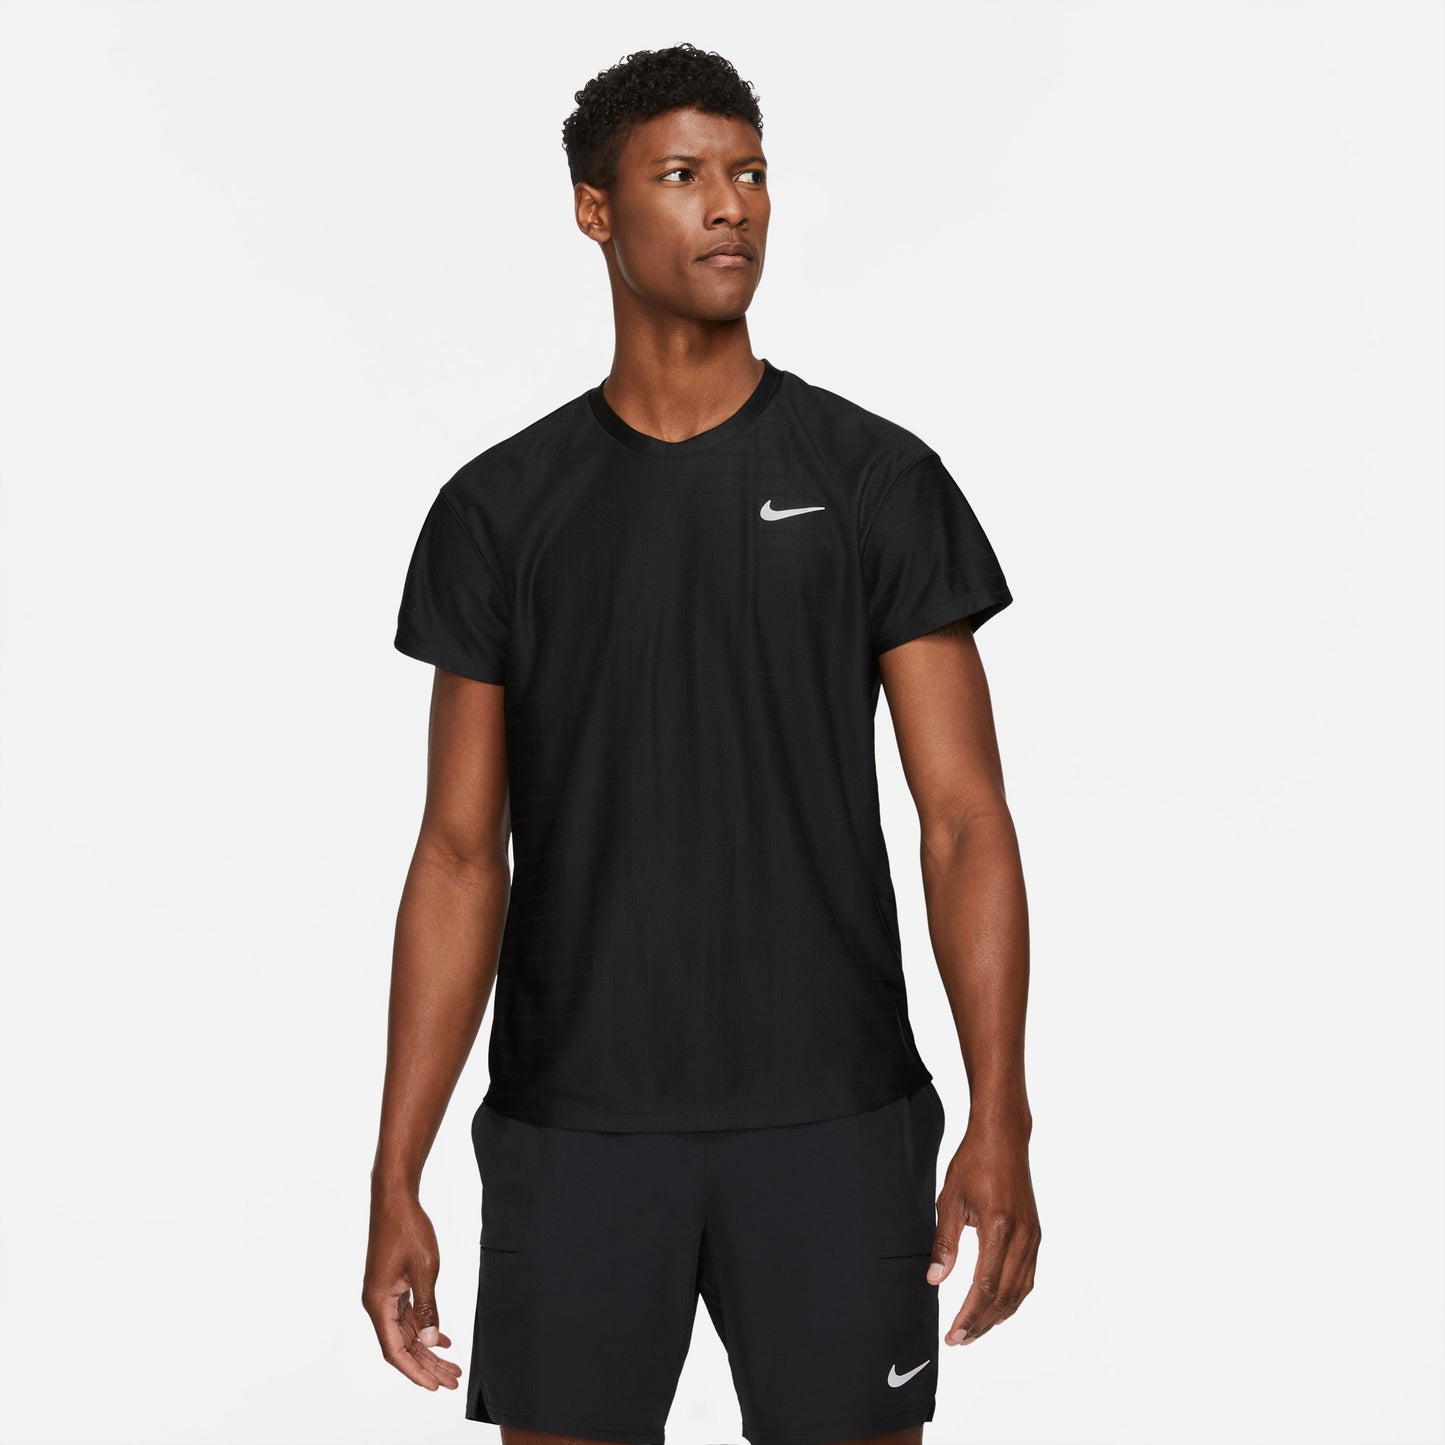 Nike Breathe Advantage Men's Tennis Shirt Black (1)